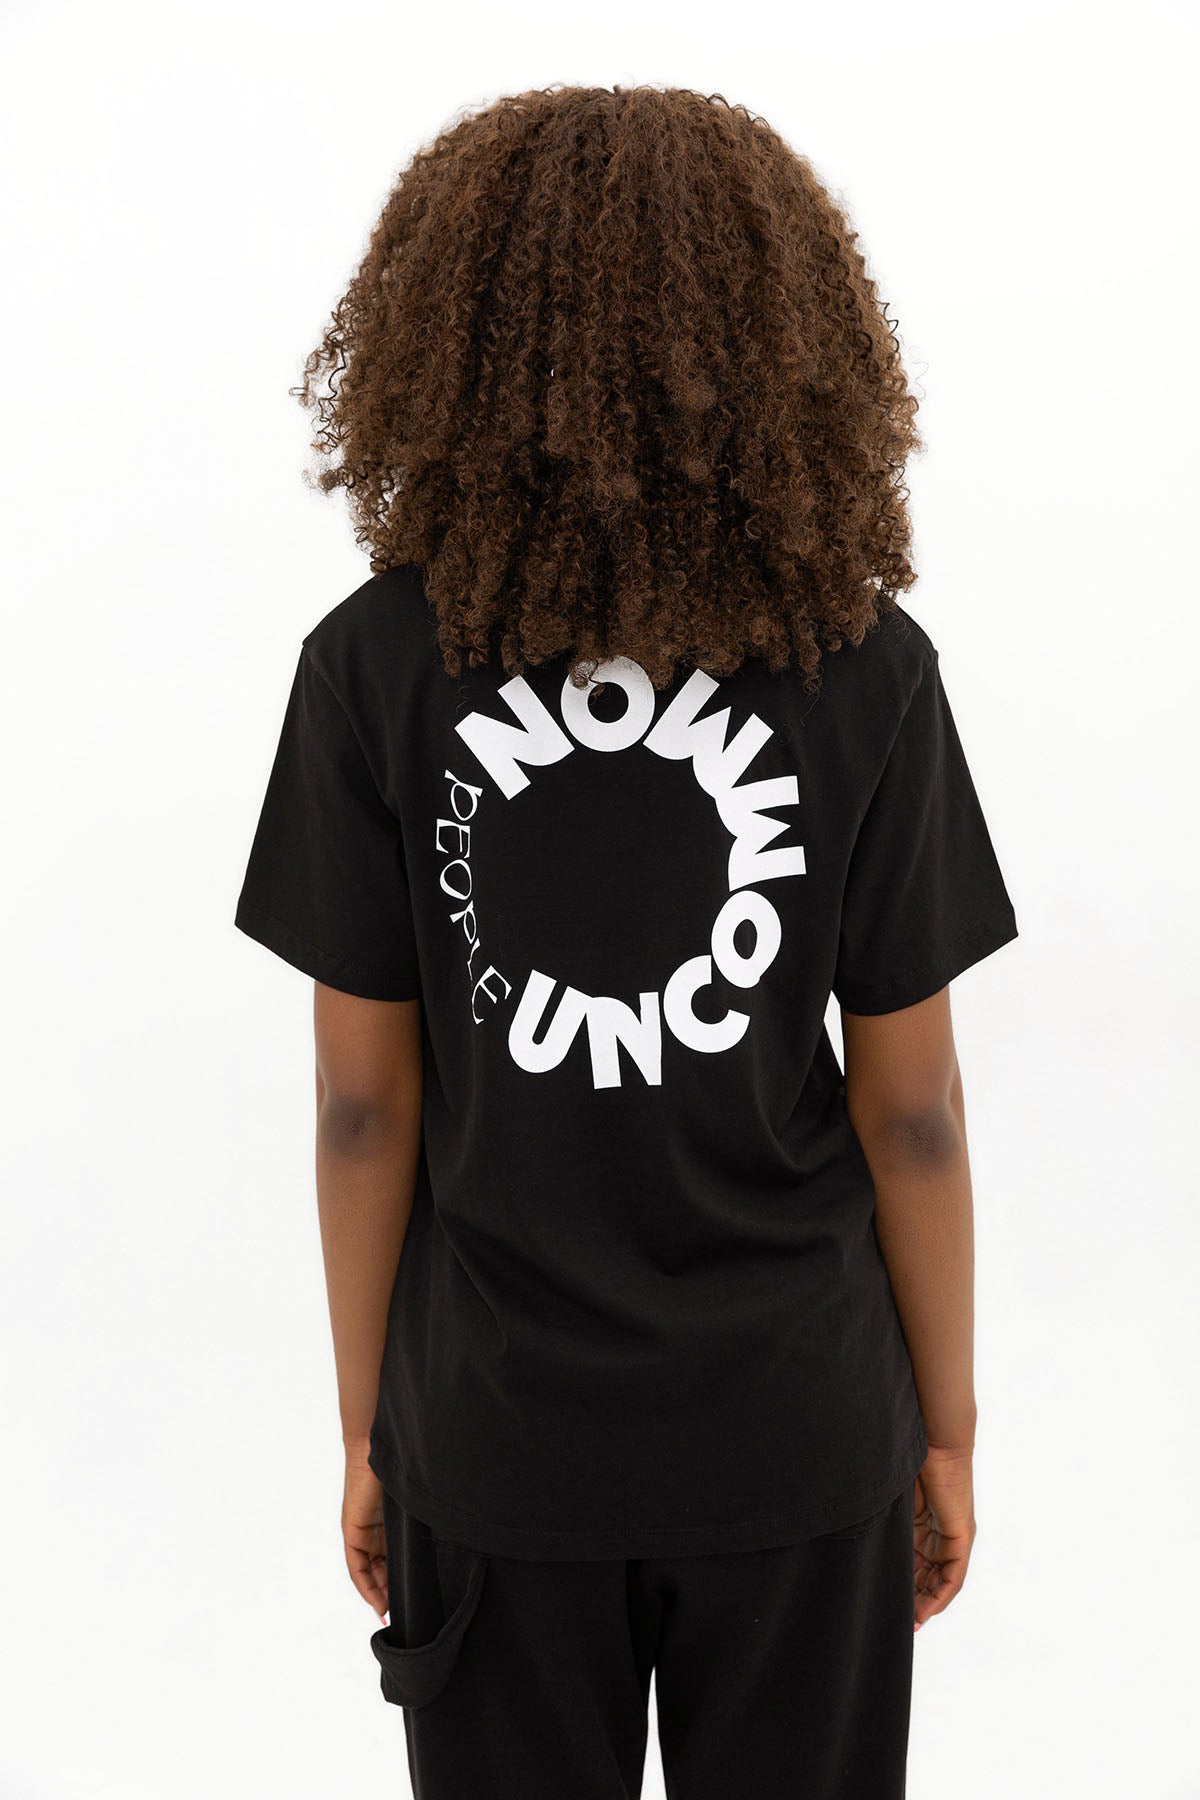 Uncommon - Black - Regular Fit T-shirt